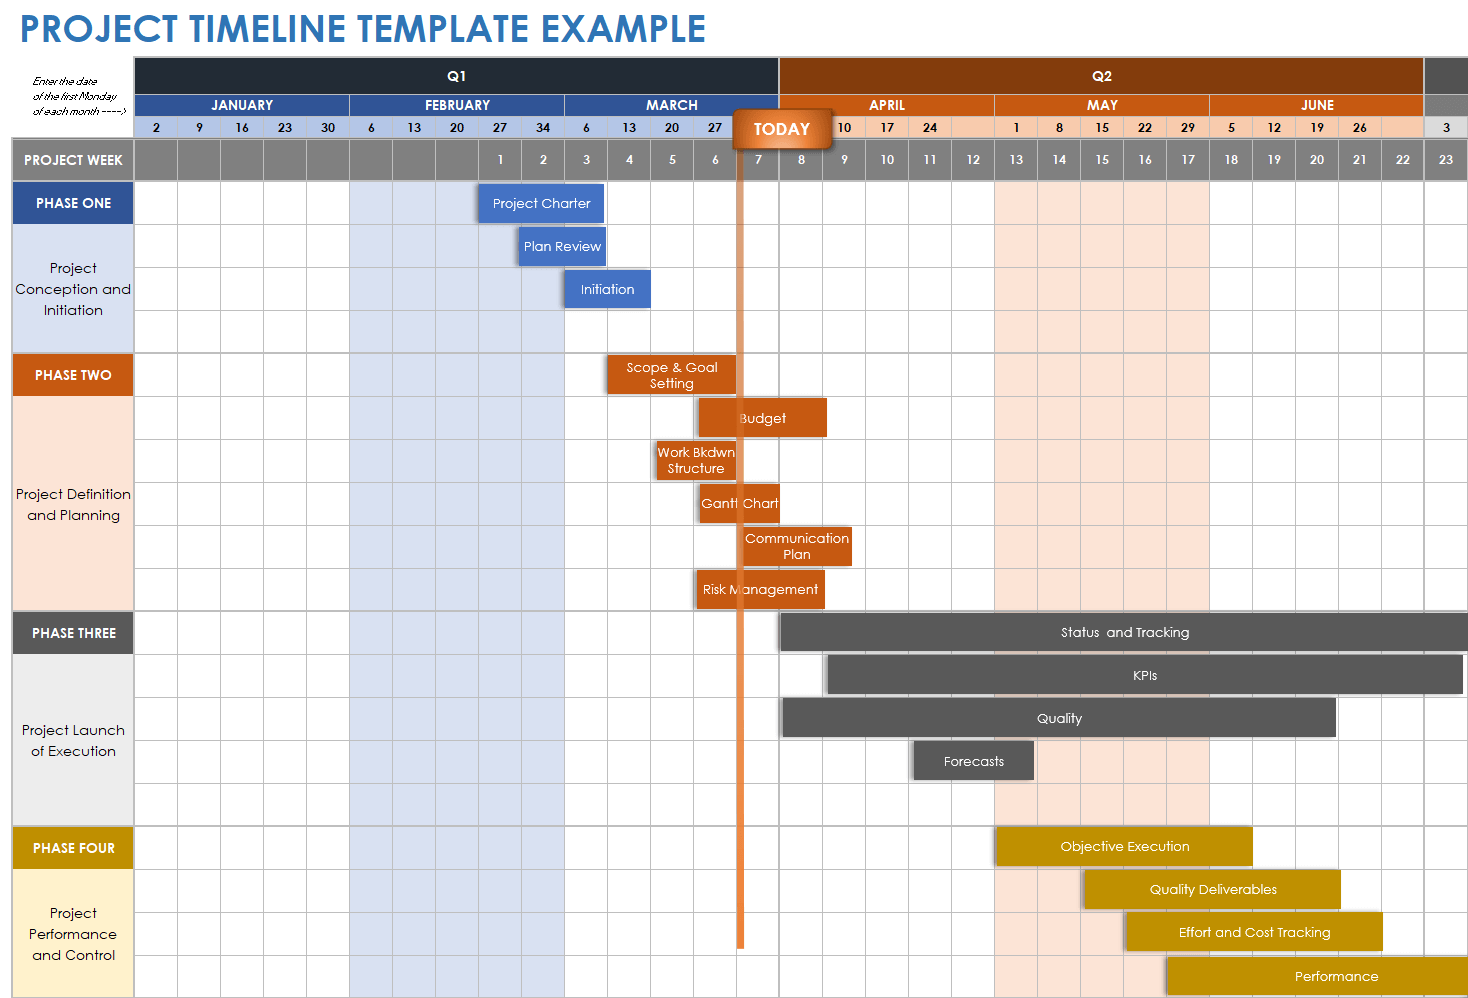 Project Timeline Templates Free Premium Templates | designinte.com